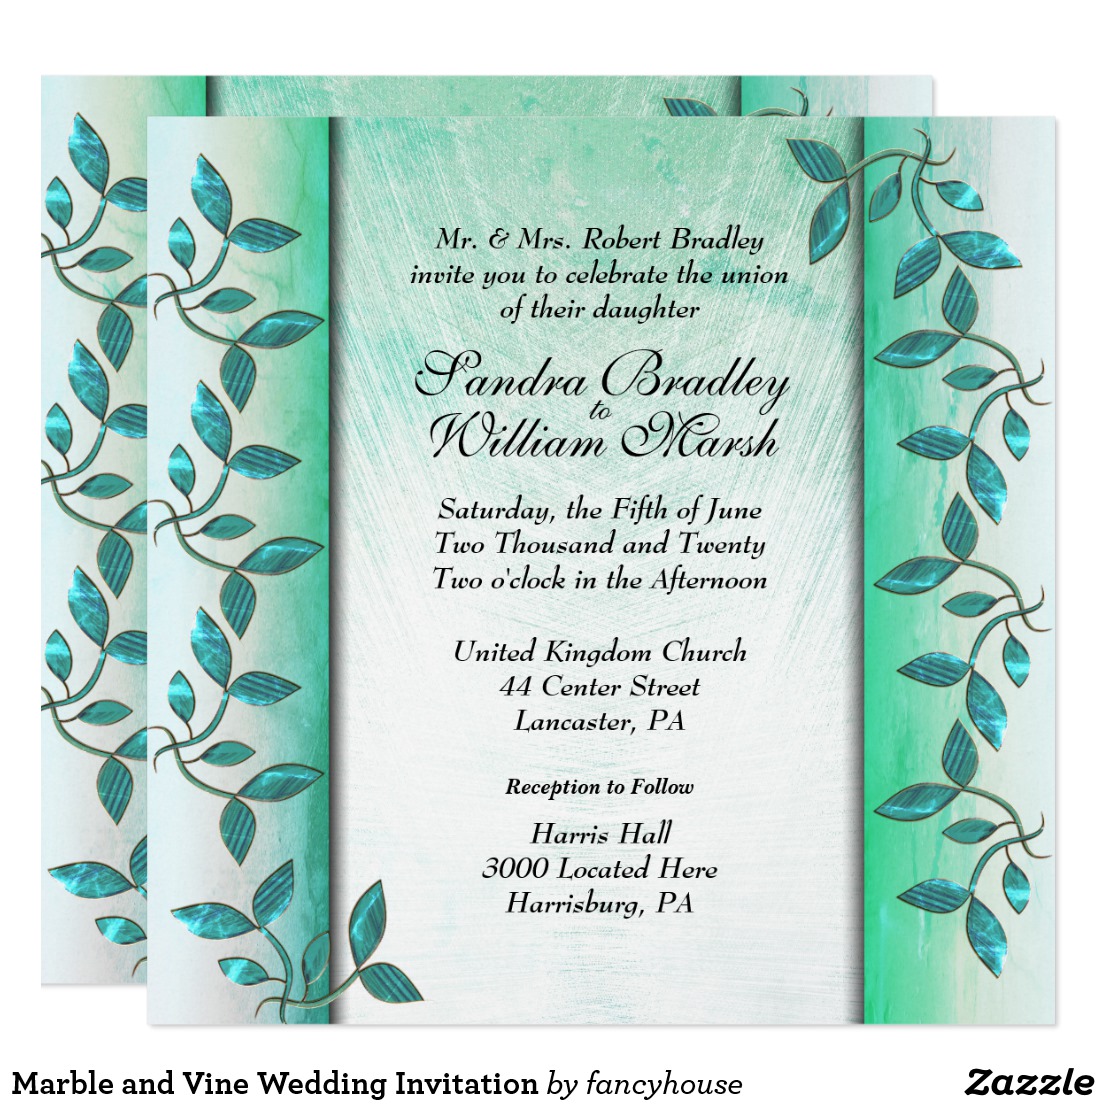 Marble and Vine Wedding Invitation